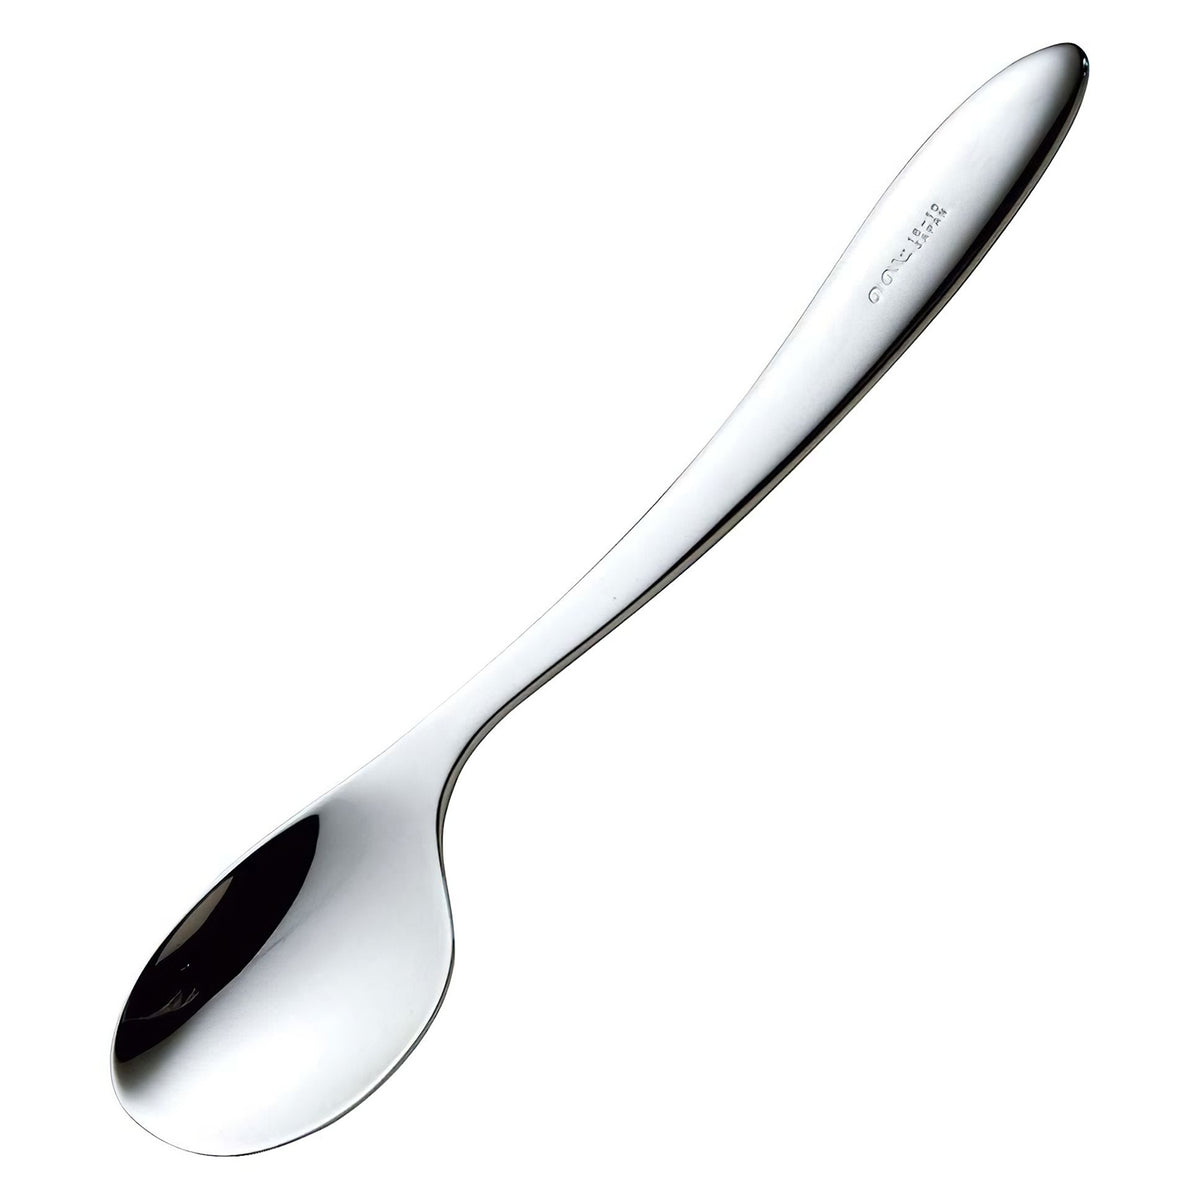 Nonoji UD Stainless Steel Spoon